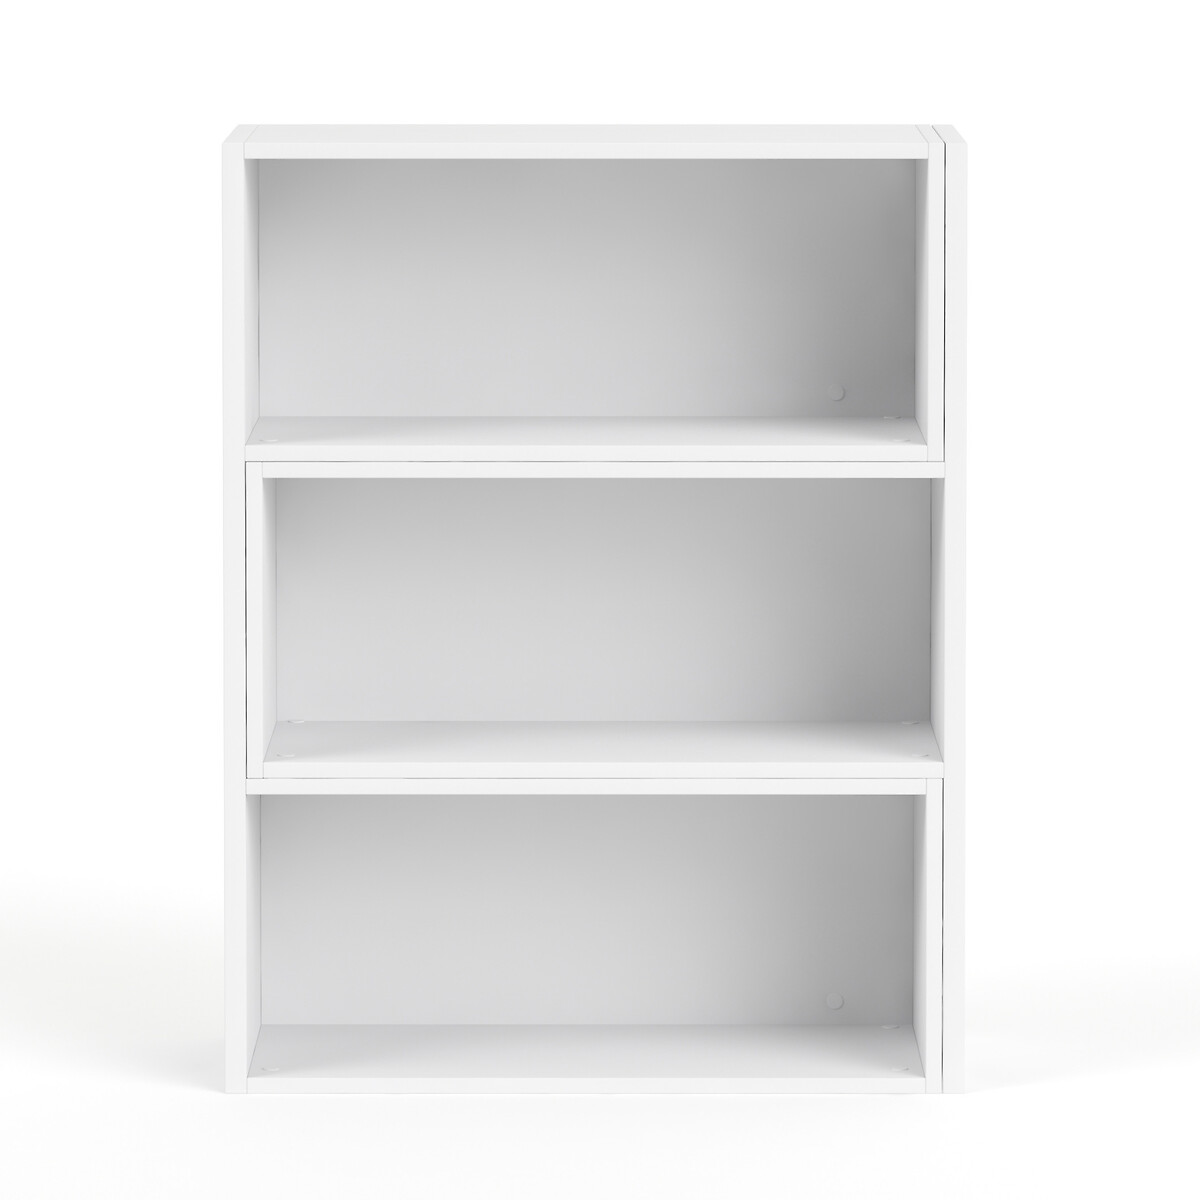 aansporing toonhoogte Vochtig Verstelbare boekenkast van 1 meter hoog, everett wit So'home | La Redoute